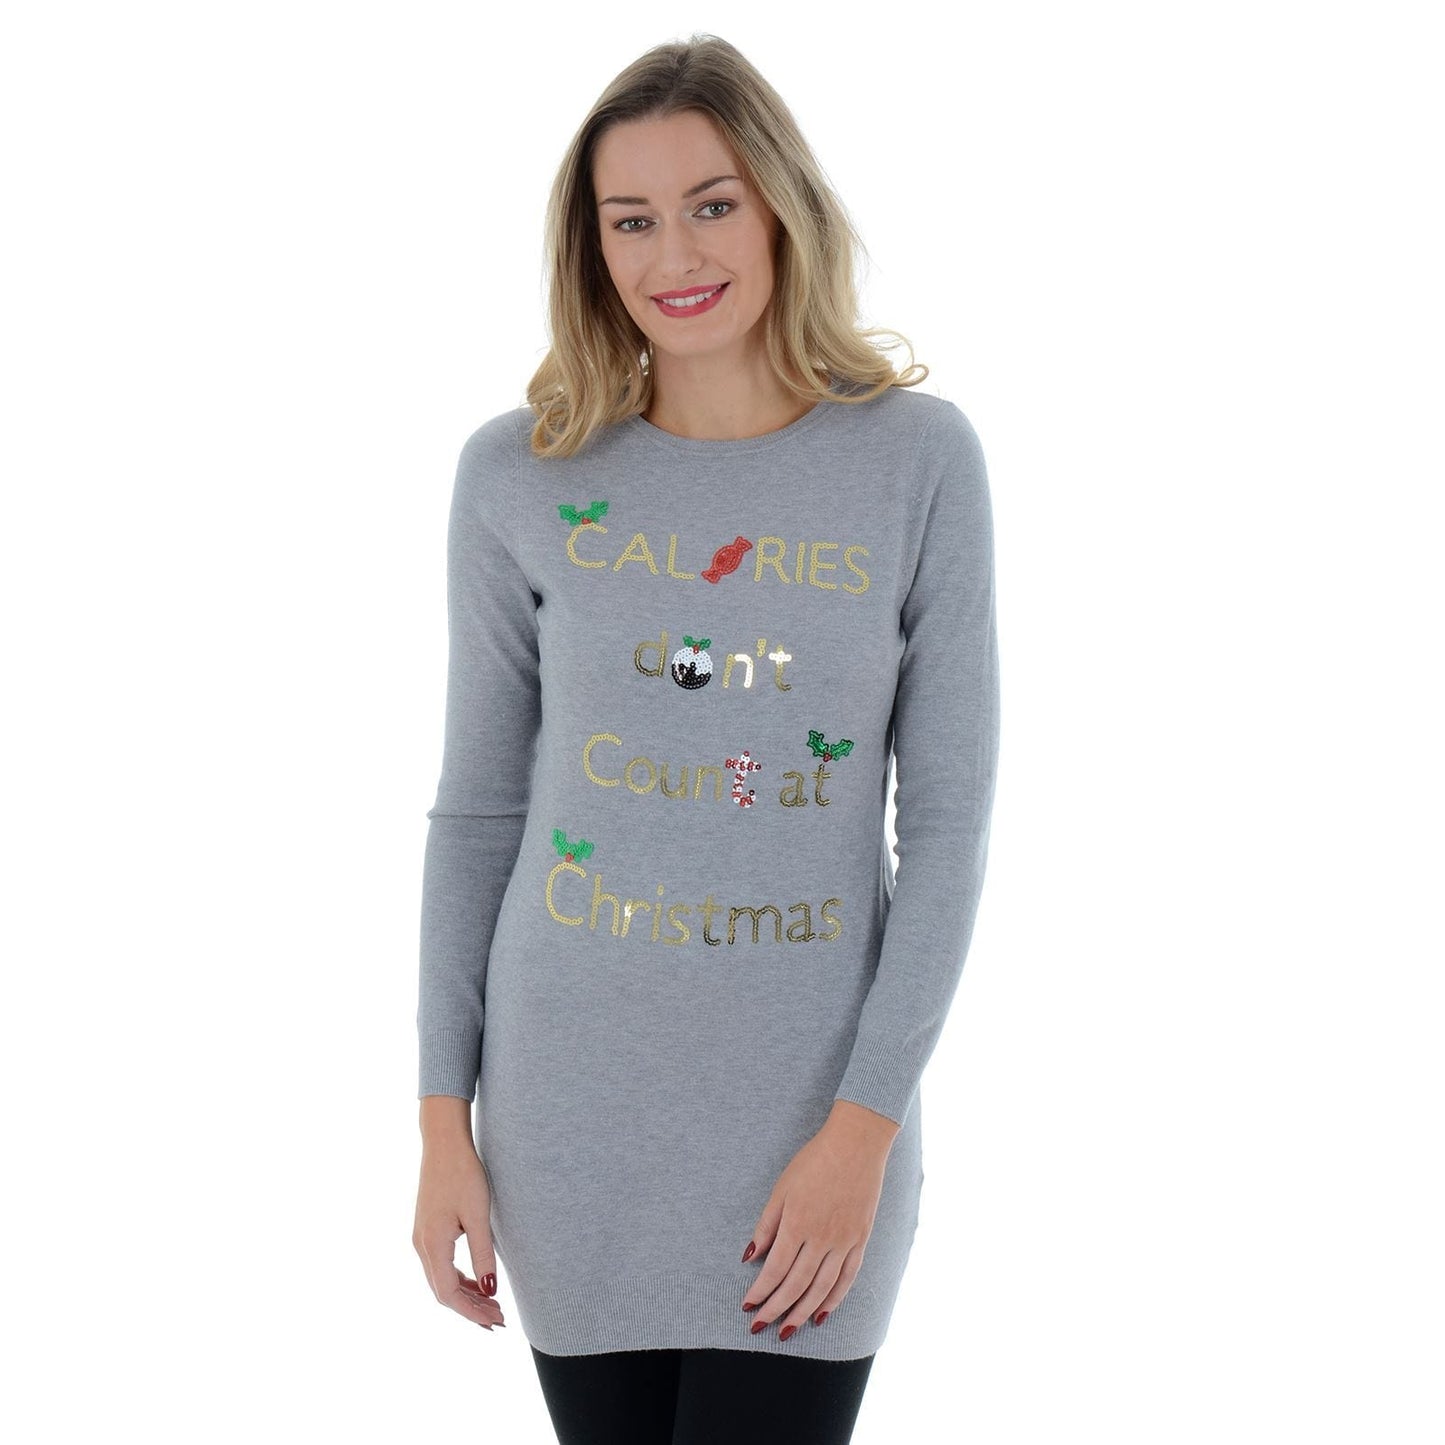 Mr Crimbo Ladies Longline Calories Sparkly Christmas Jumper - MrCrimbo.co.uk -VISILW186_K - Grey -festive knit